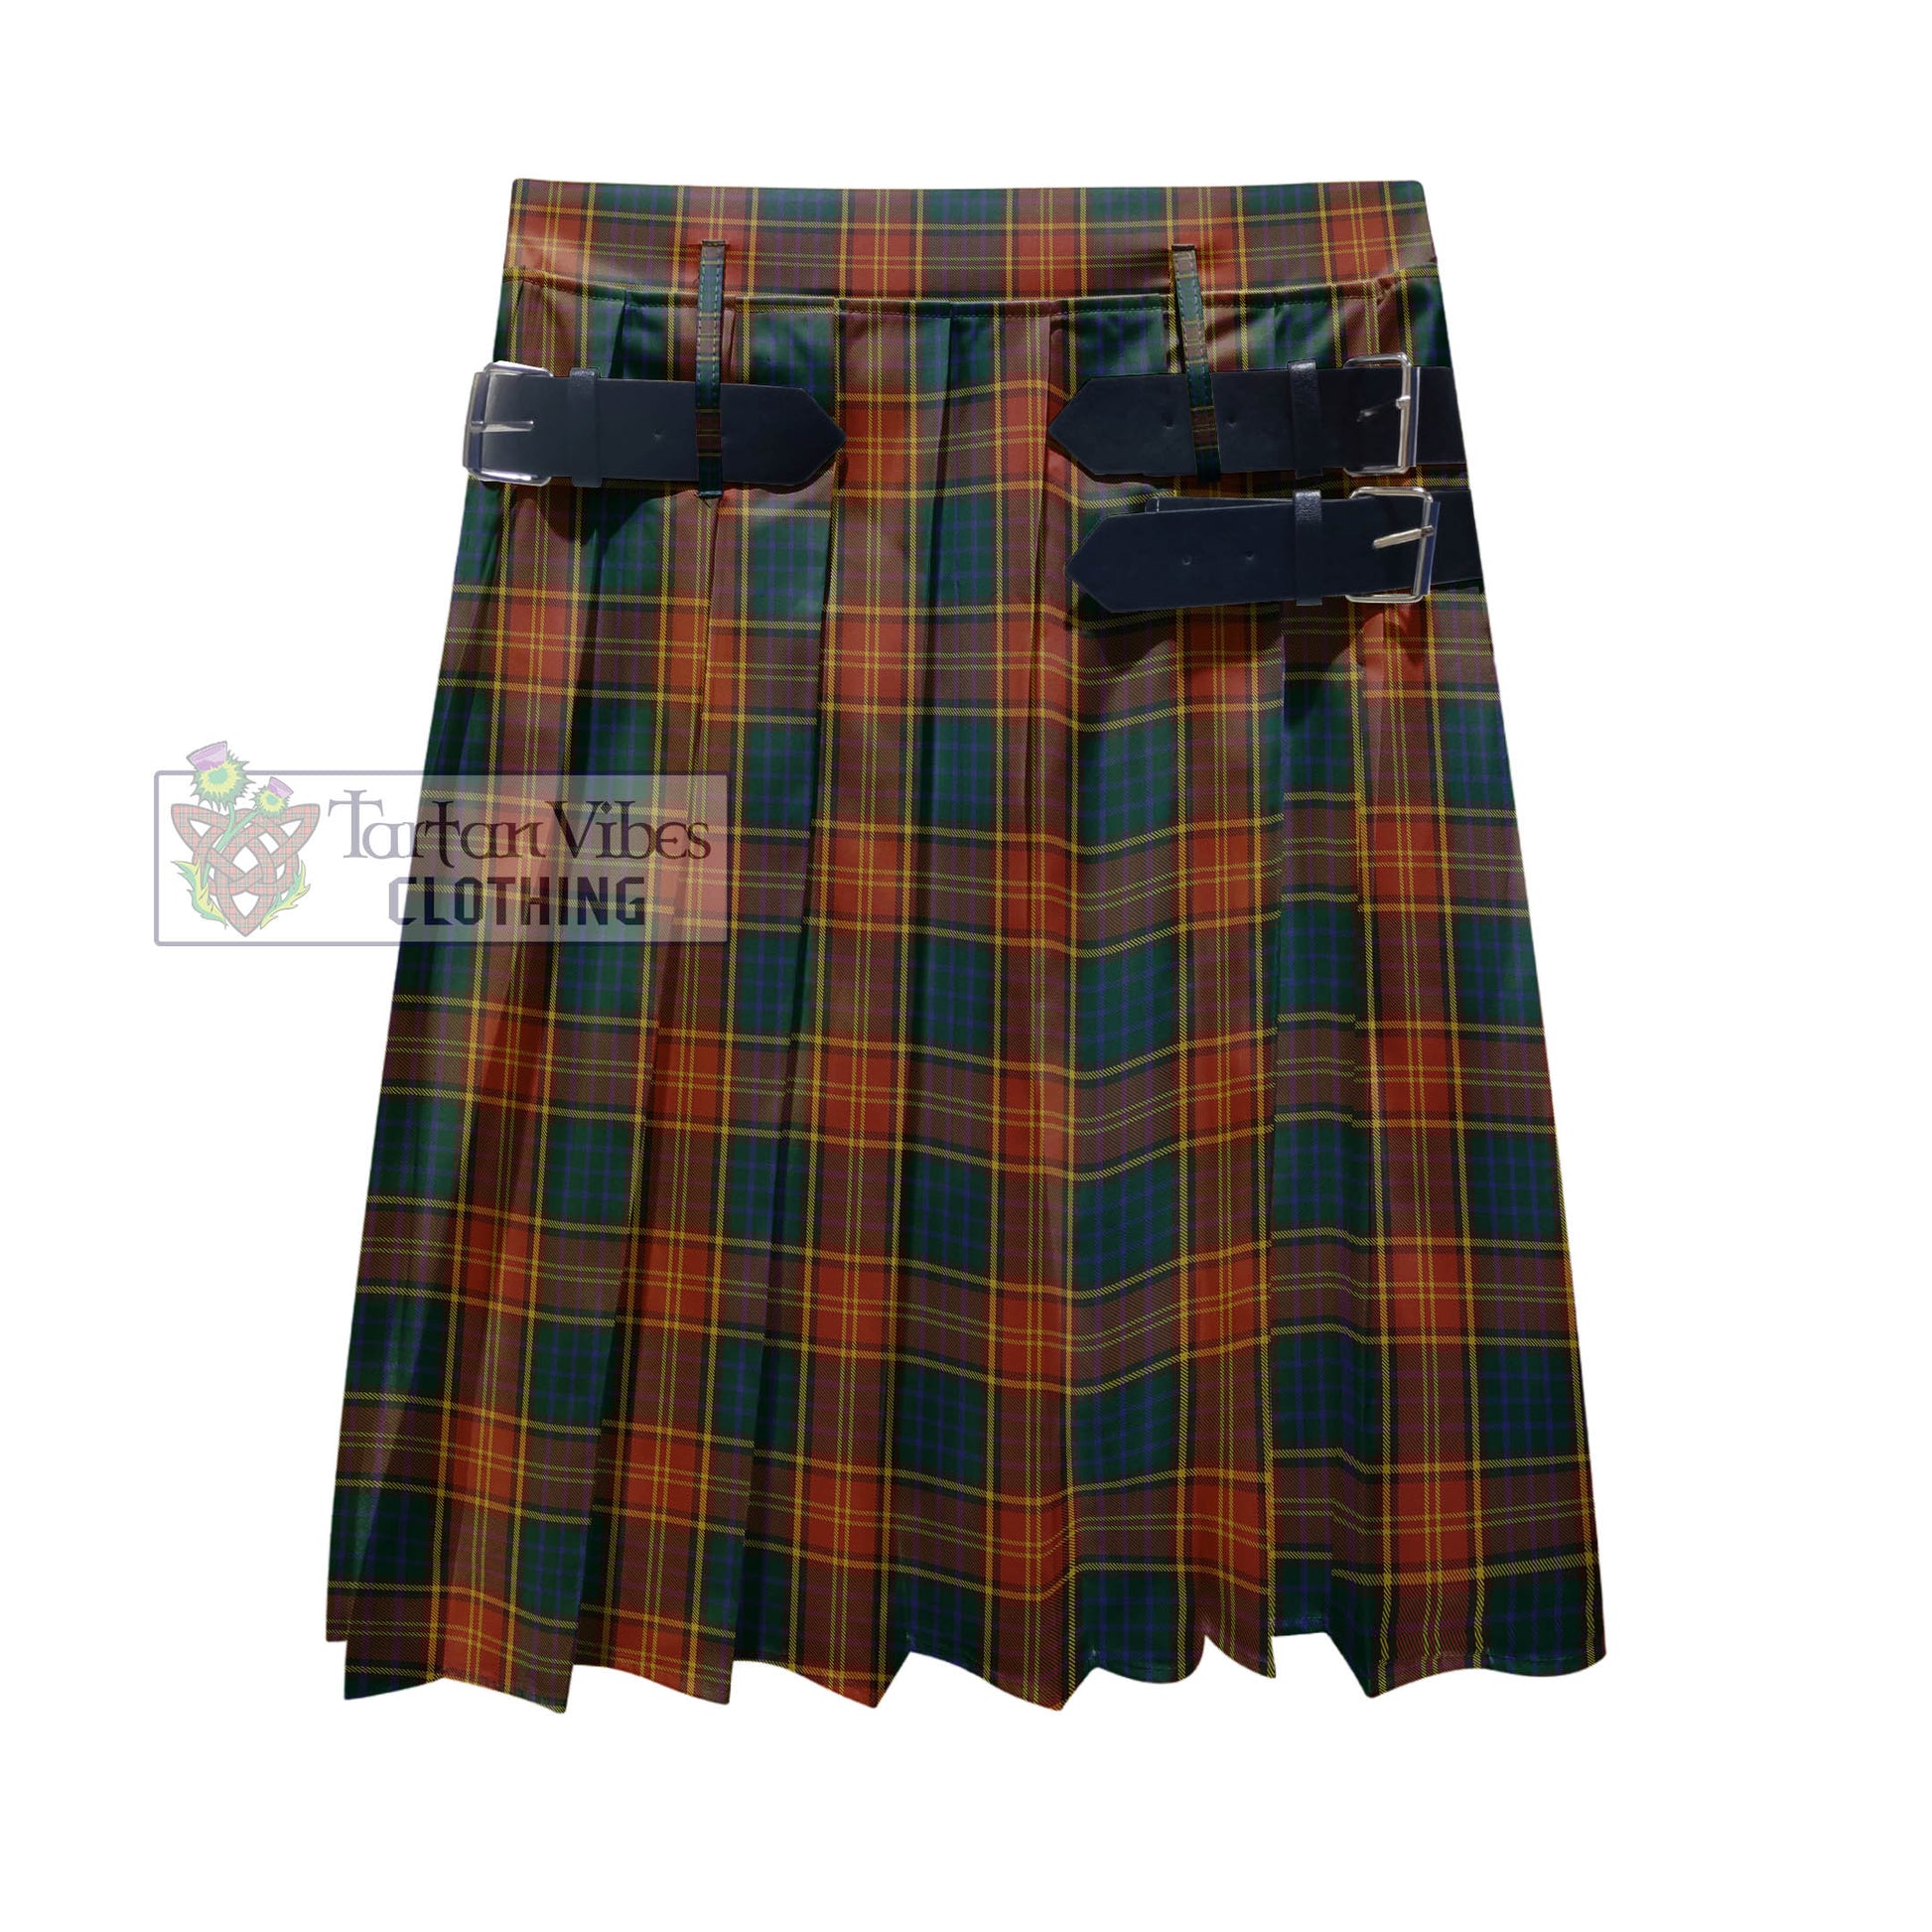 Tartan Vibes Clothing Roscommon County Ireland Tartan Men's Pleated Skirt - Fashion Casual Retro Scottish Style